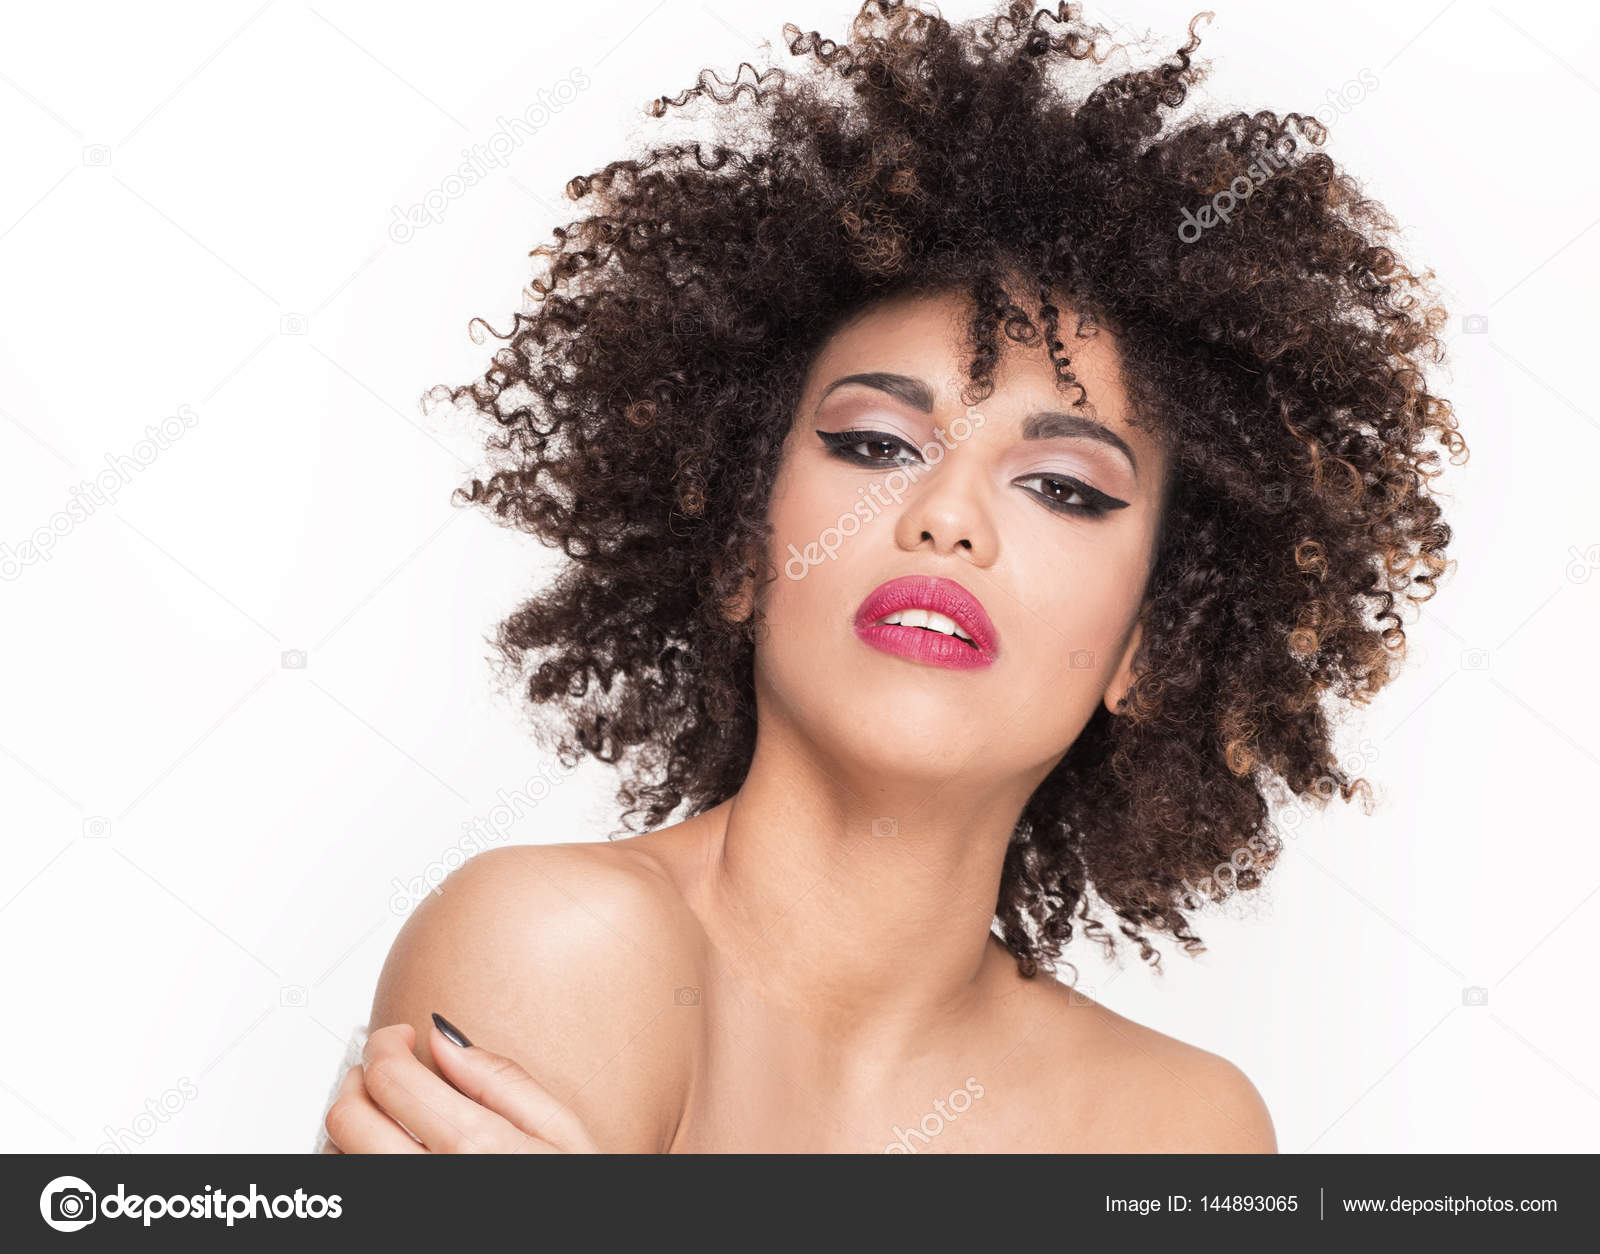 https://st3.depositphotos.com/3071651/14489/i/1600/depositphotos_144893065-stock-photo-sensual-african-american-woman-posing.jpg